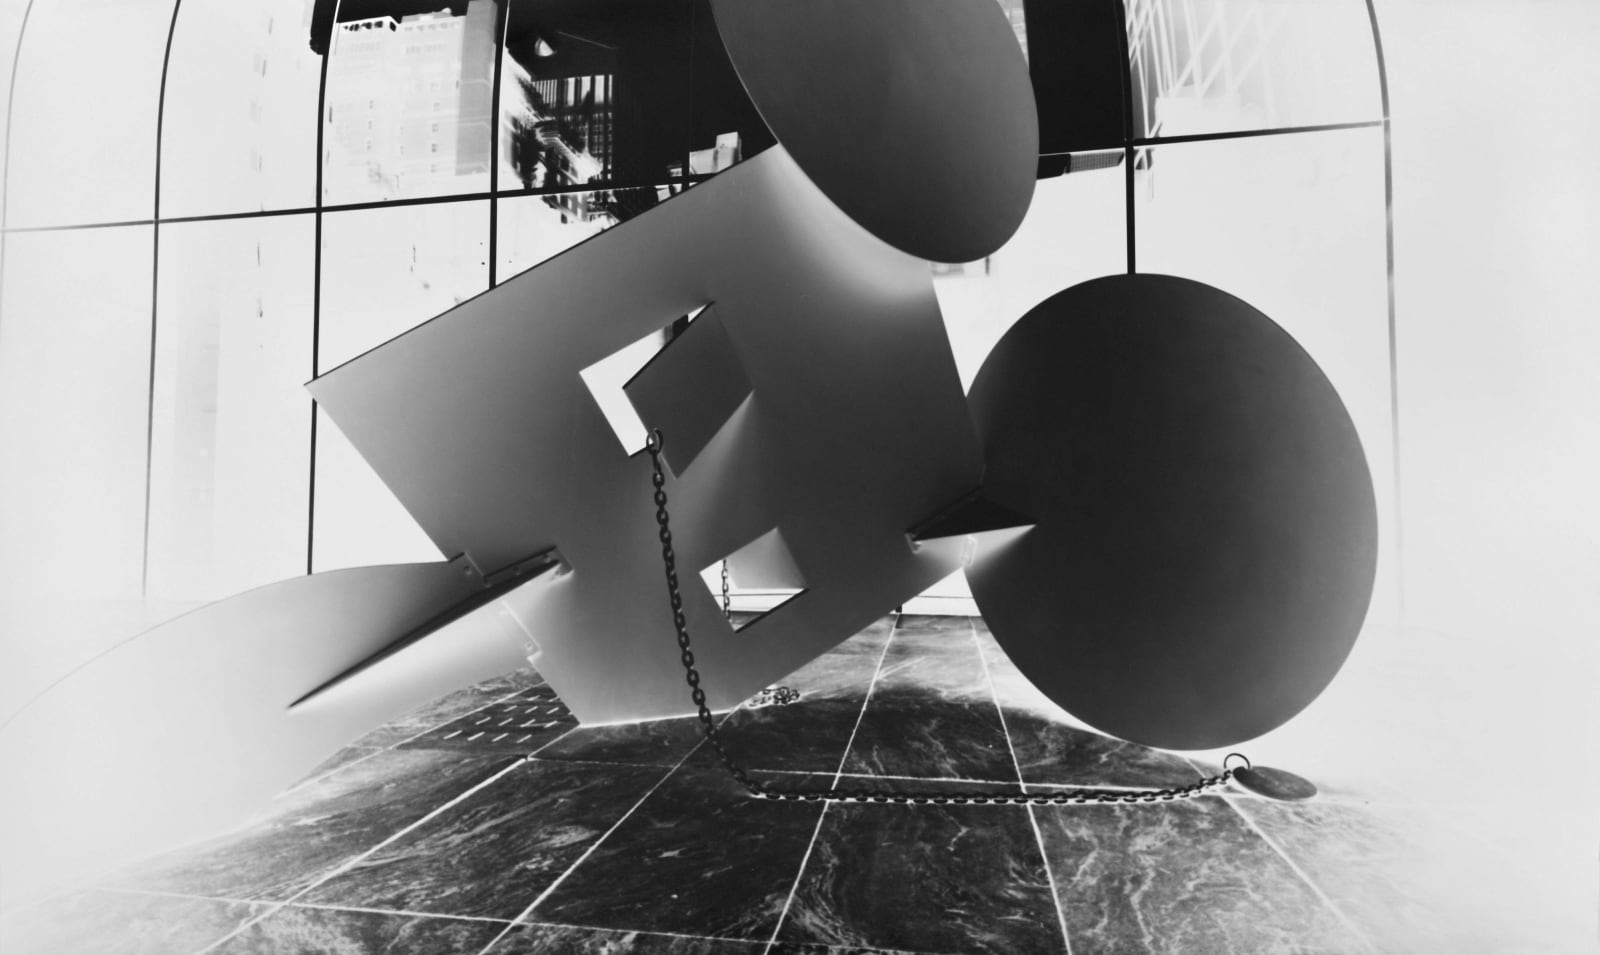 Vera Lutter Claes Oldenburg, Geometric Mouse, Variation I, Scale A: October 15, 2013 inverse black and white image of Oldenburg sculpture